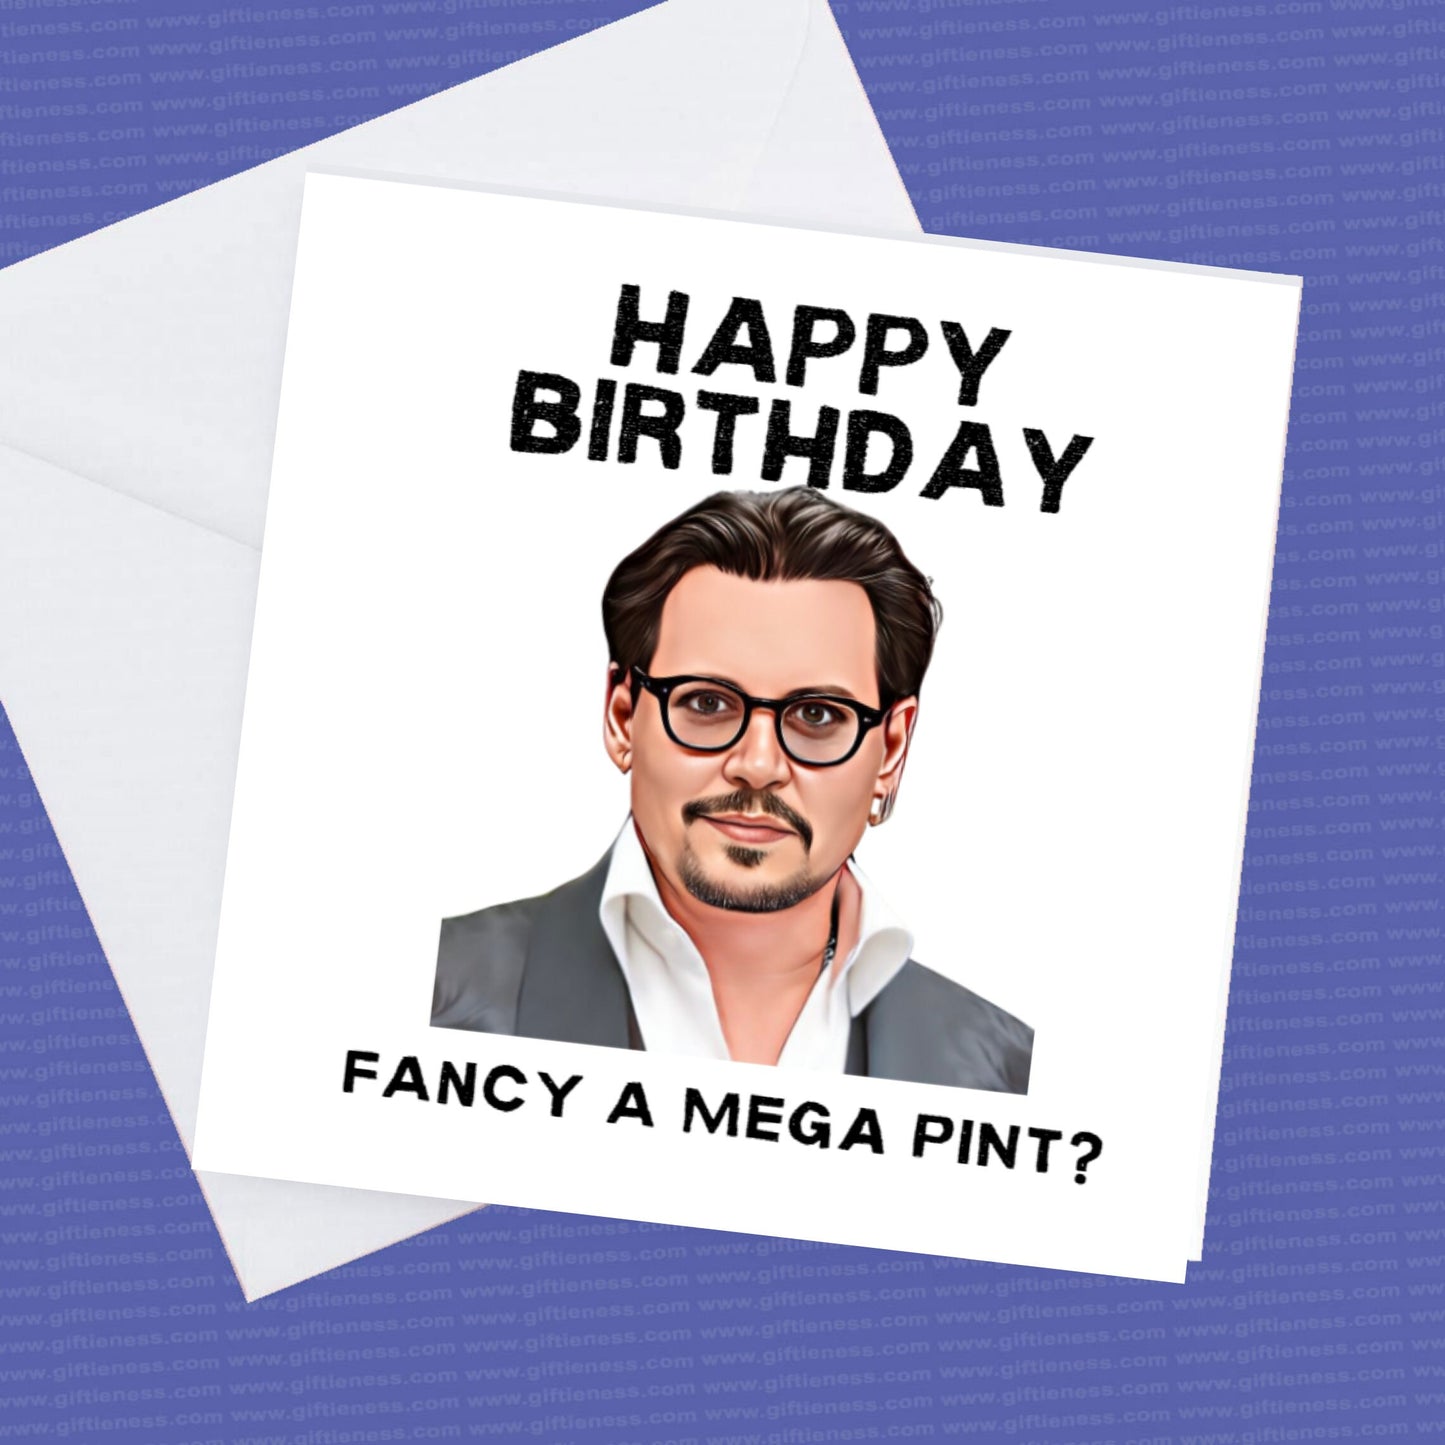 Happy Birthday Fancy Mega Pint Johnny Depp Card